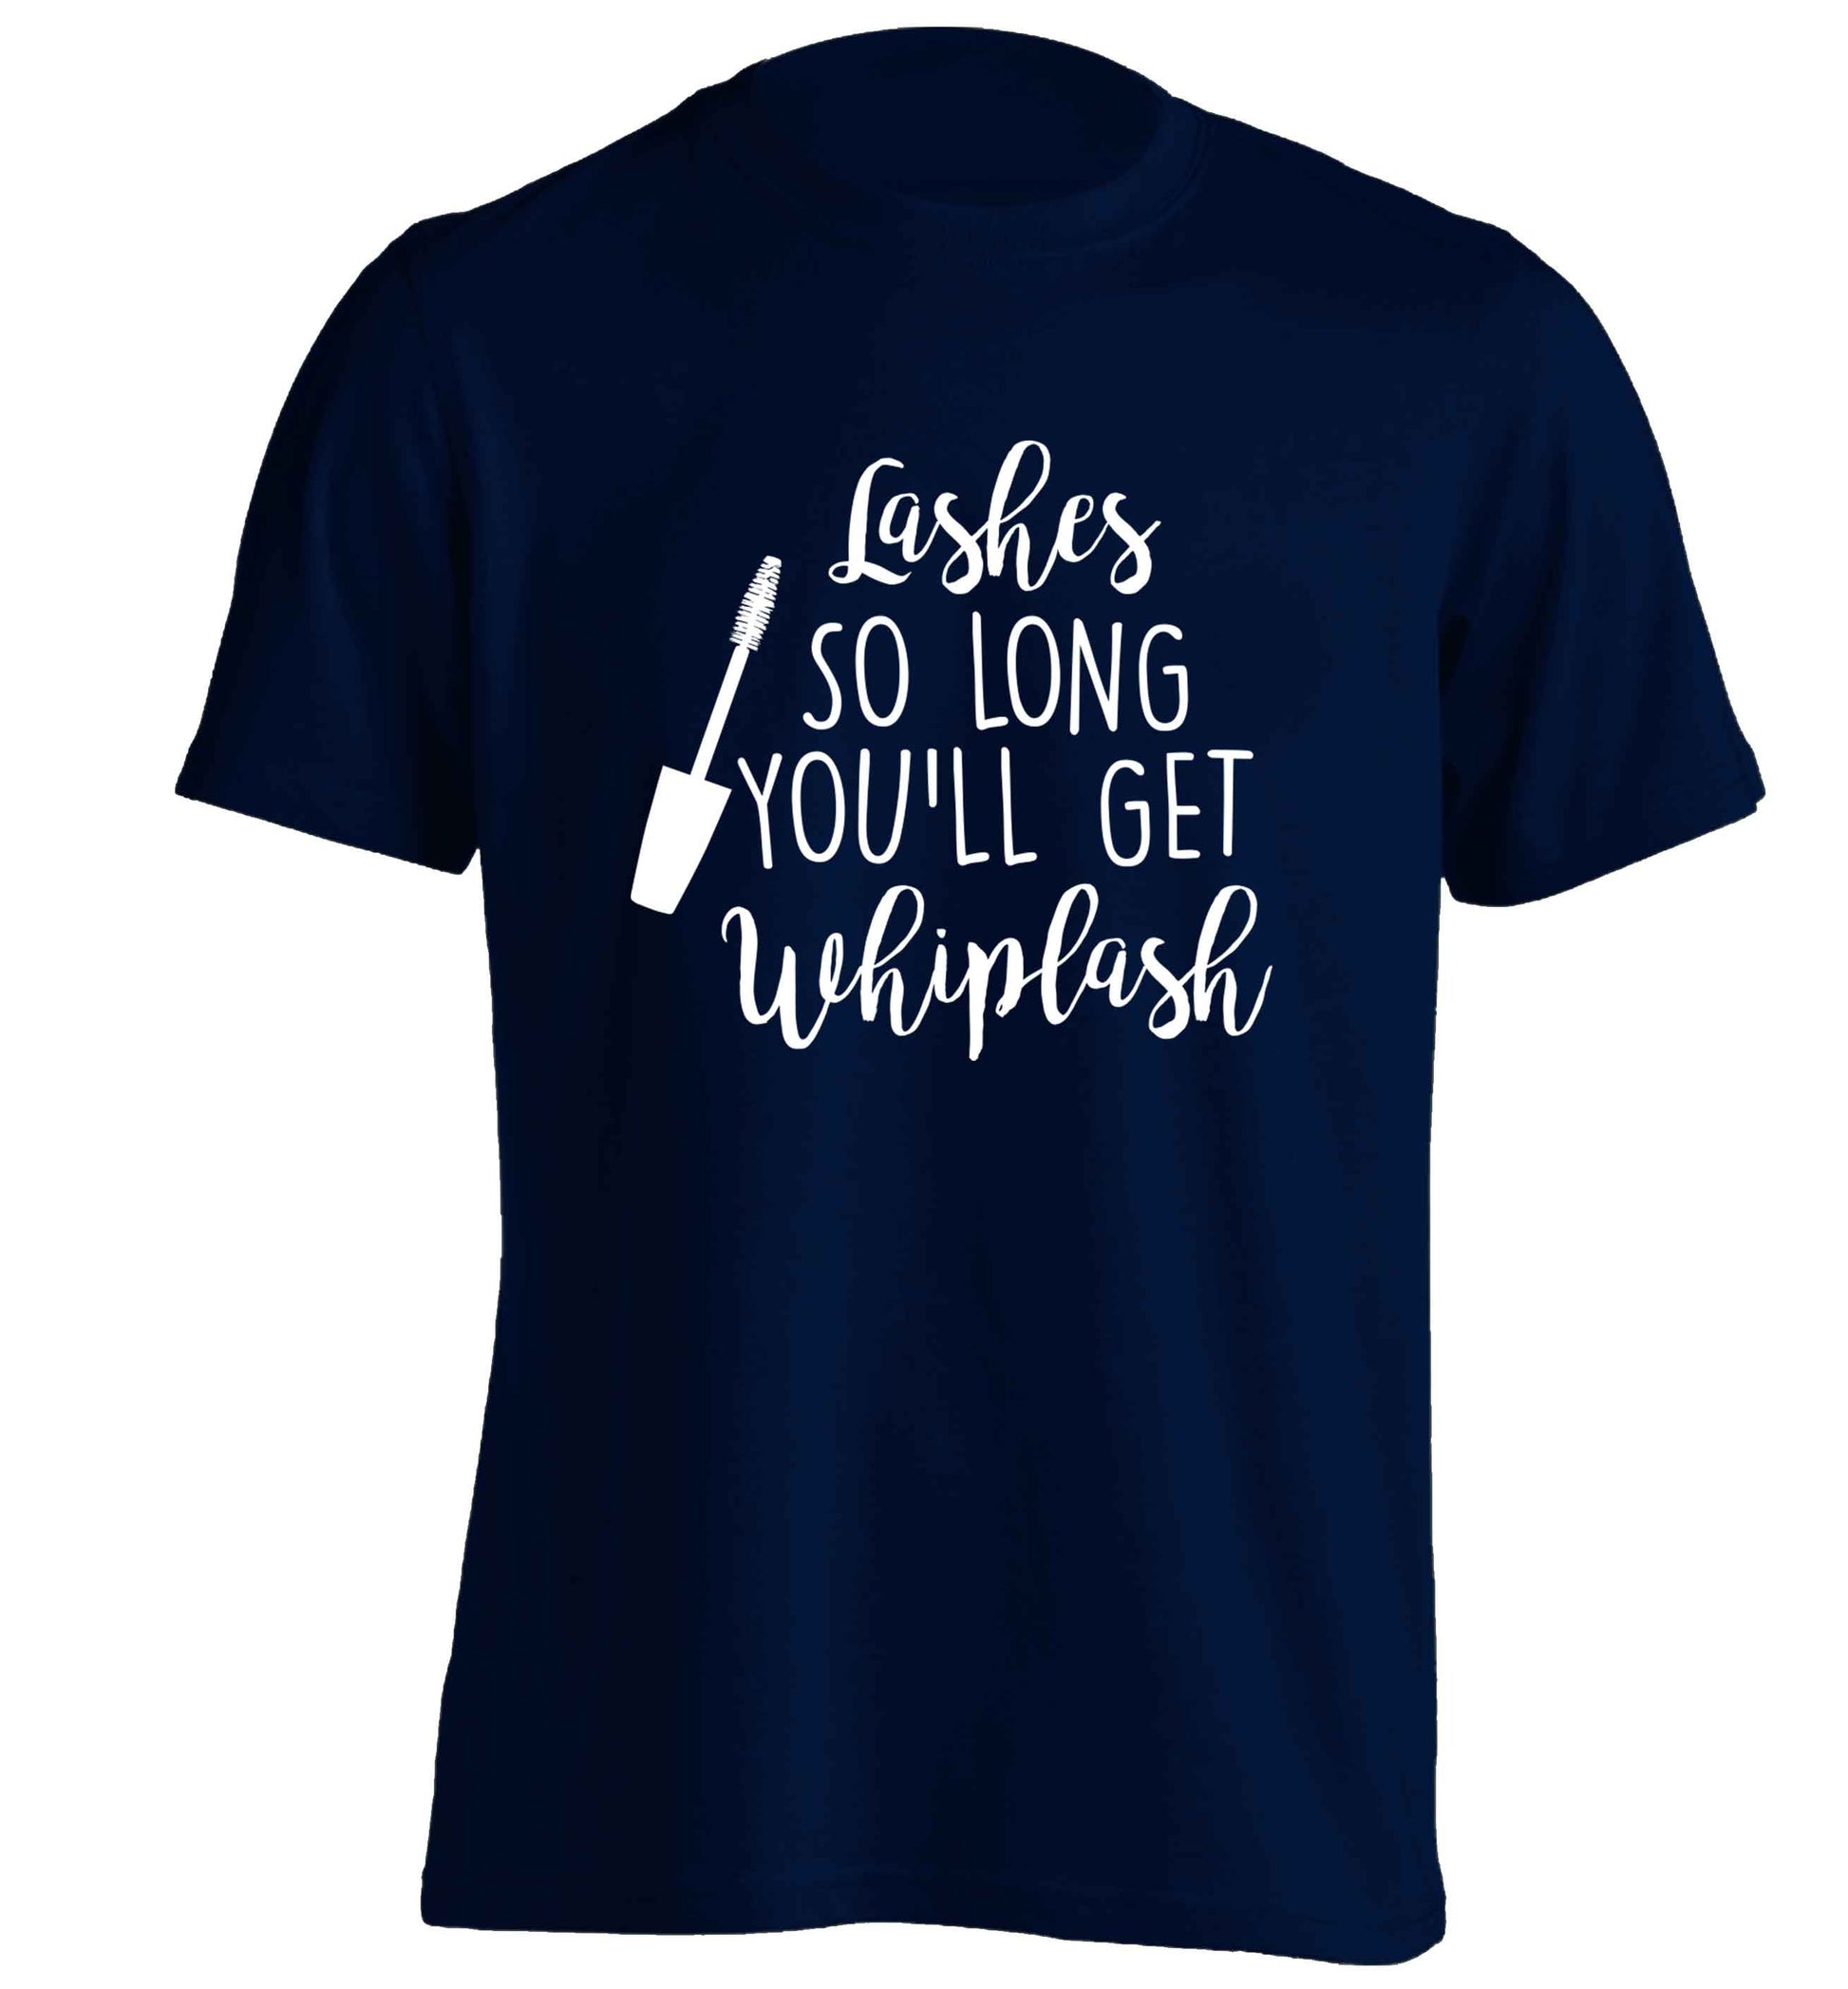 Lashes so long you'll get whiplash adults unisex navy Tshirt 2XL